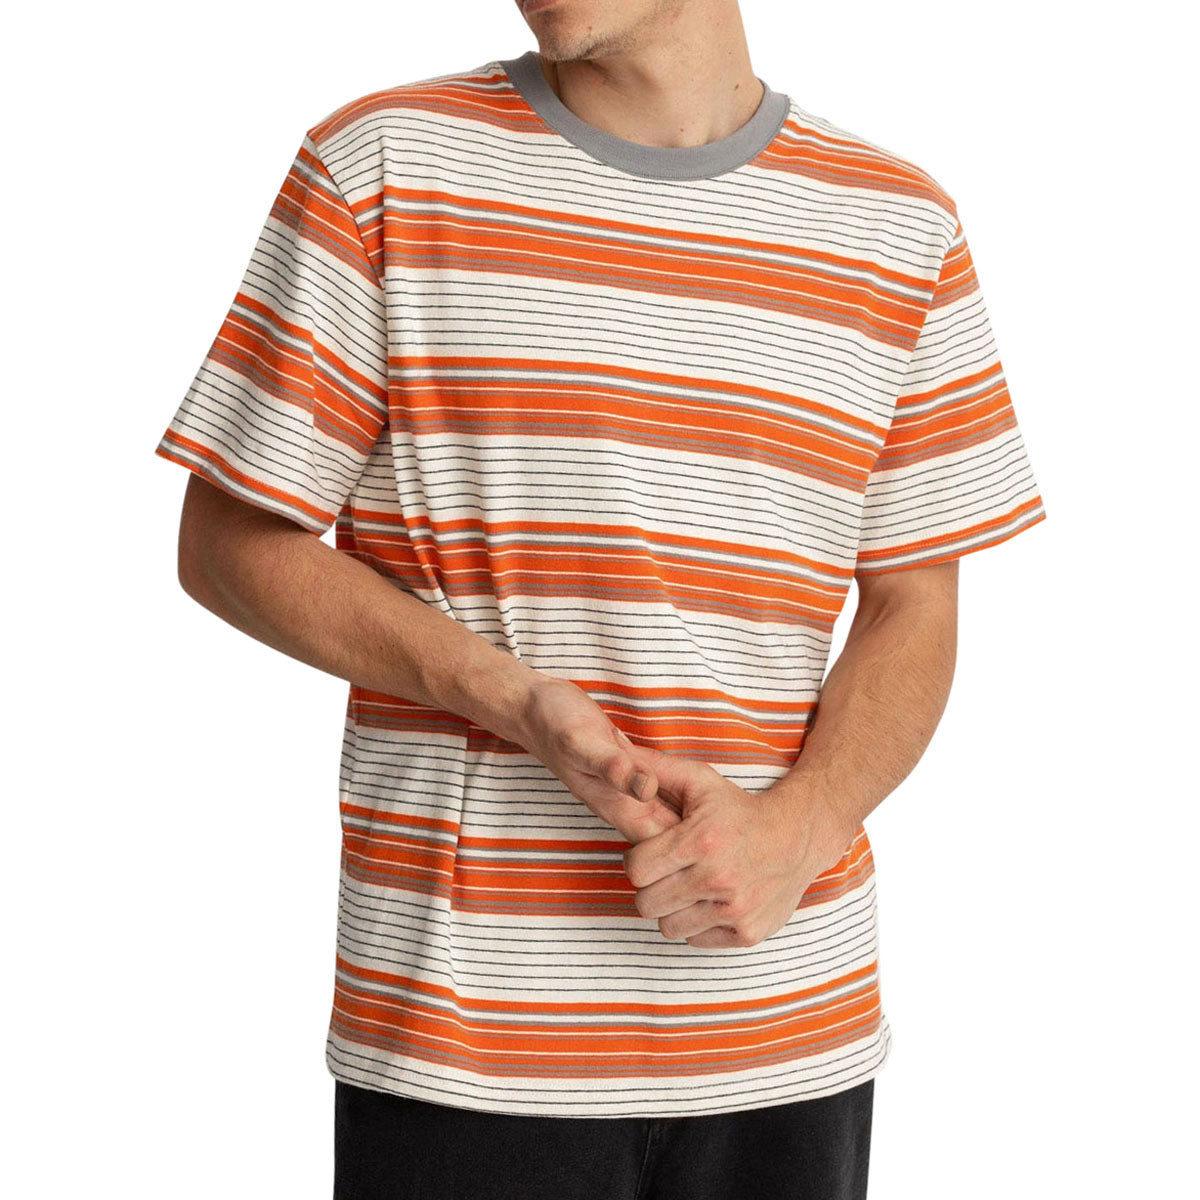 Rhythm Vintage Stripe T-Shirt - Natural image 2